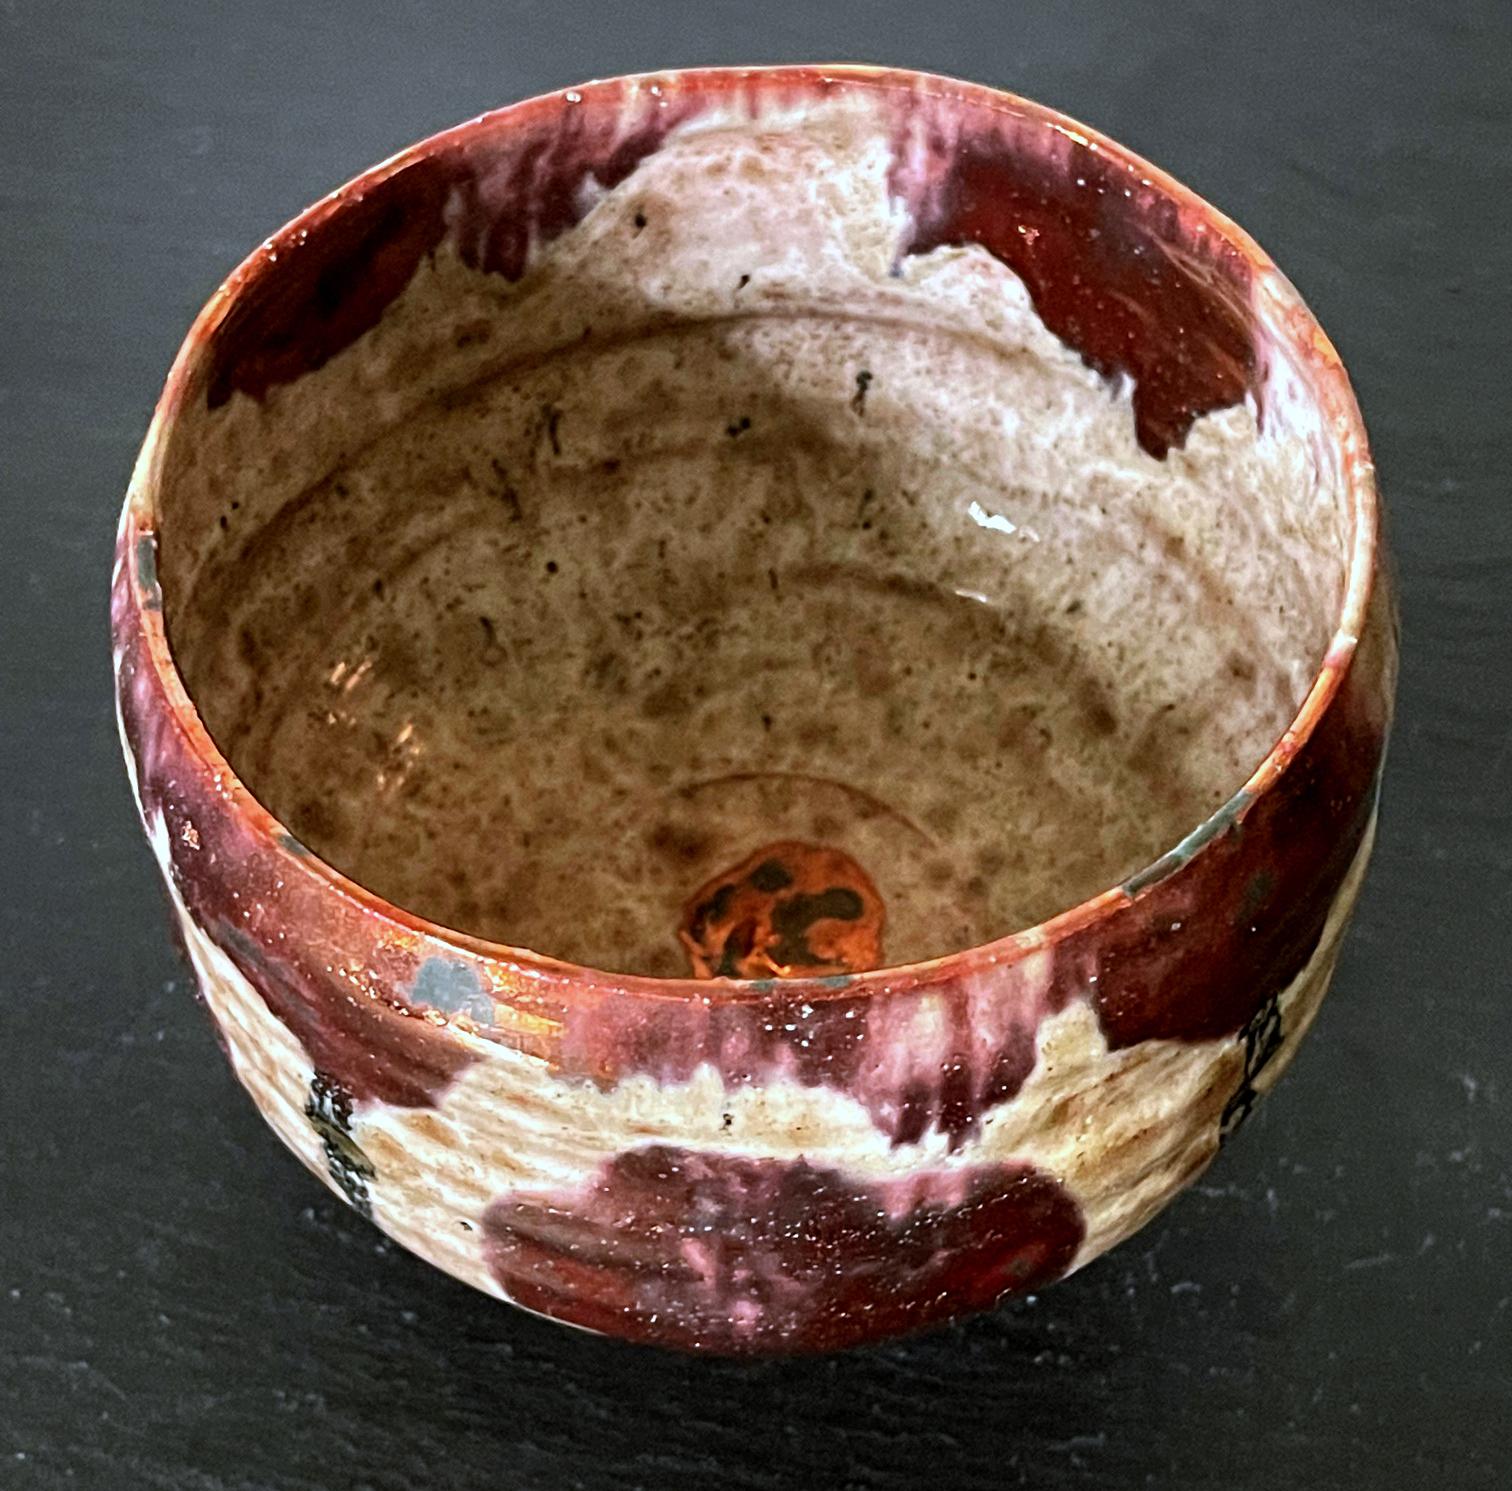 Ceramic Lusterware Bowl with Metallic Glaze by Beatrice Wood 1